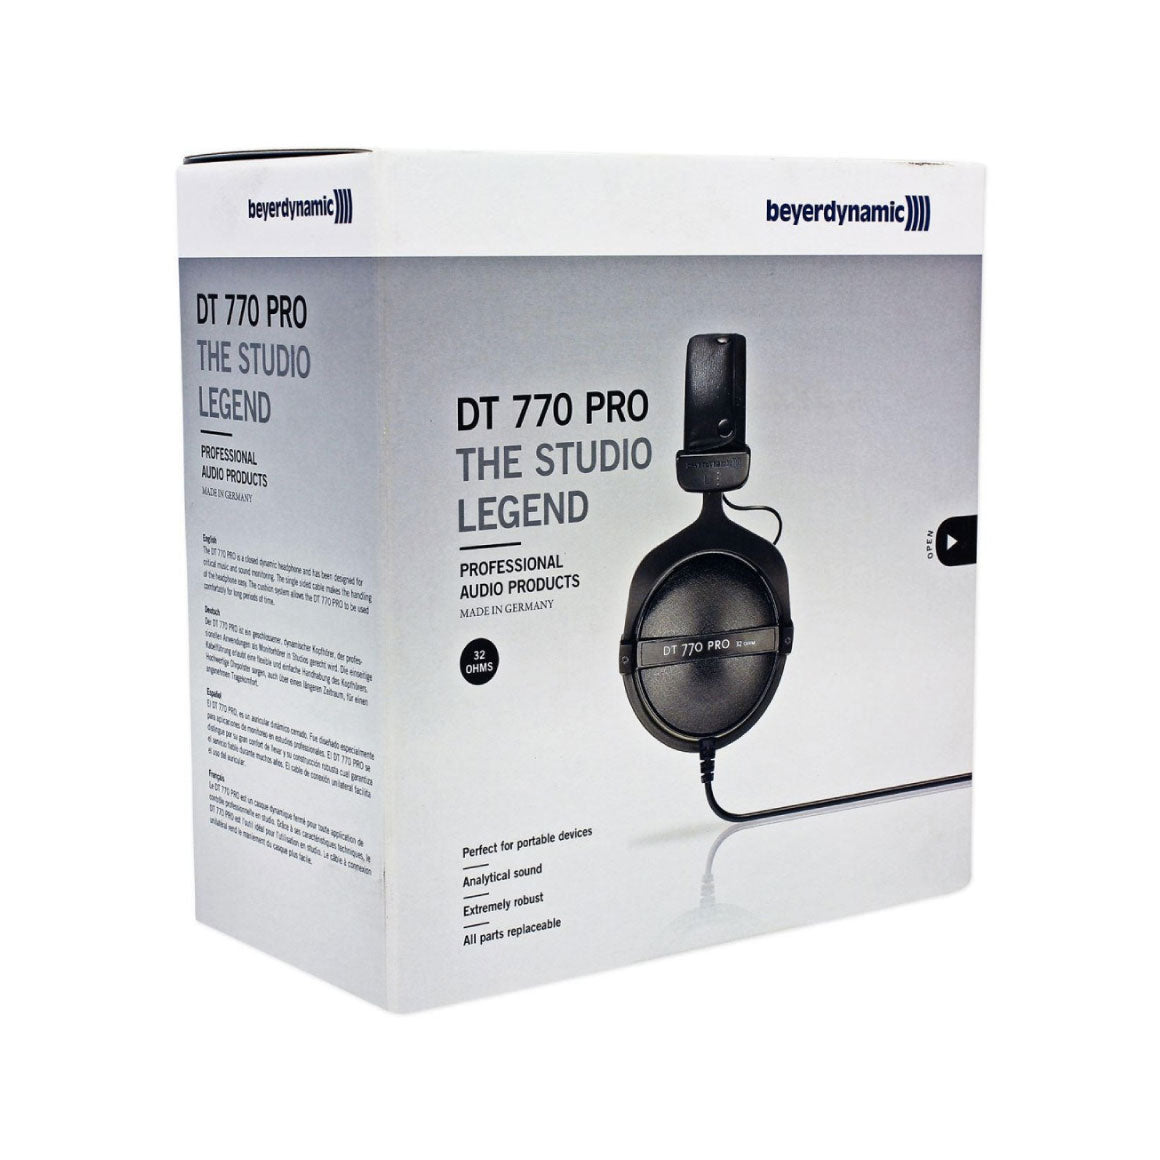 Headphone-Zone-Beyerdynamic-DT 770 PRO-32ohms